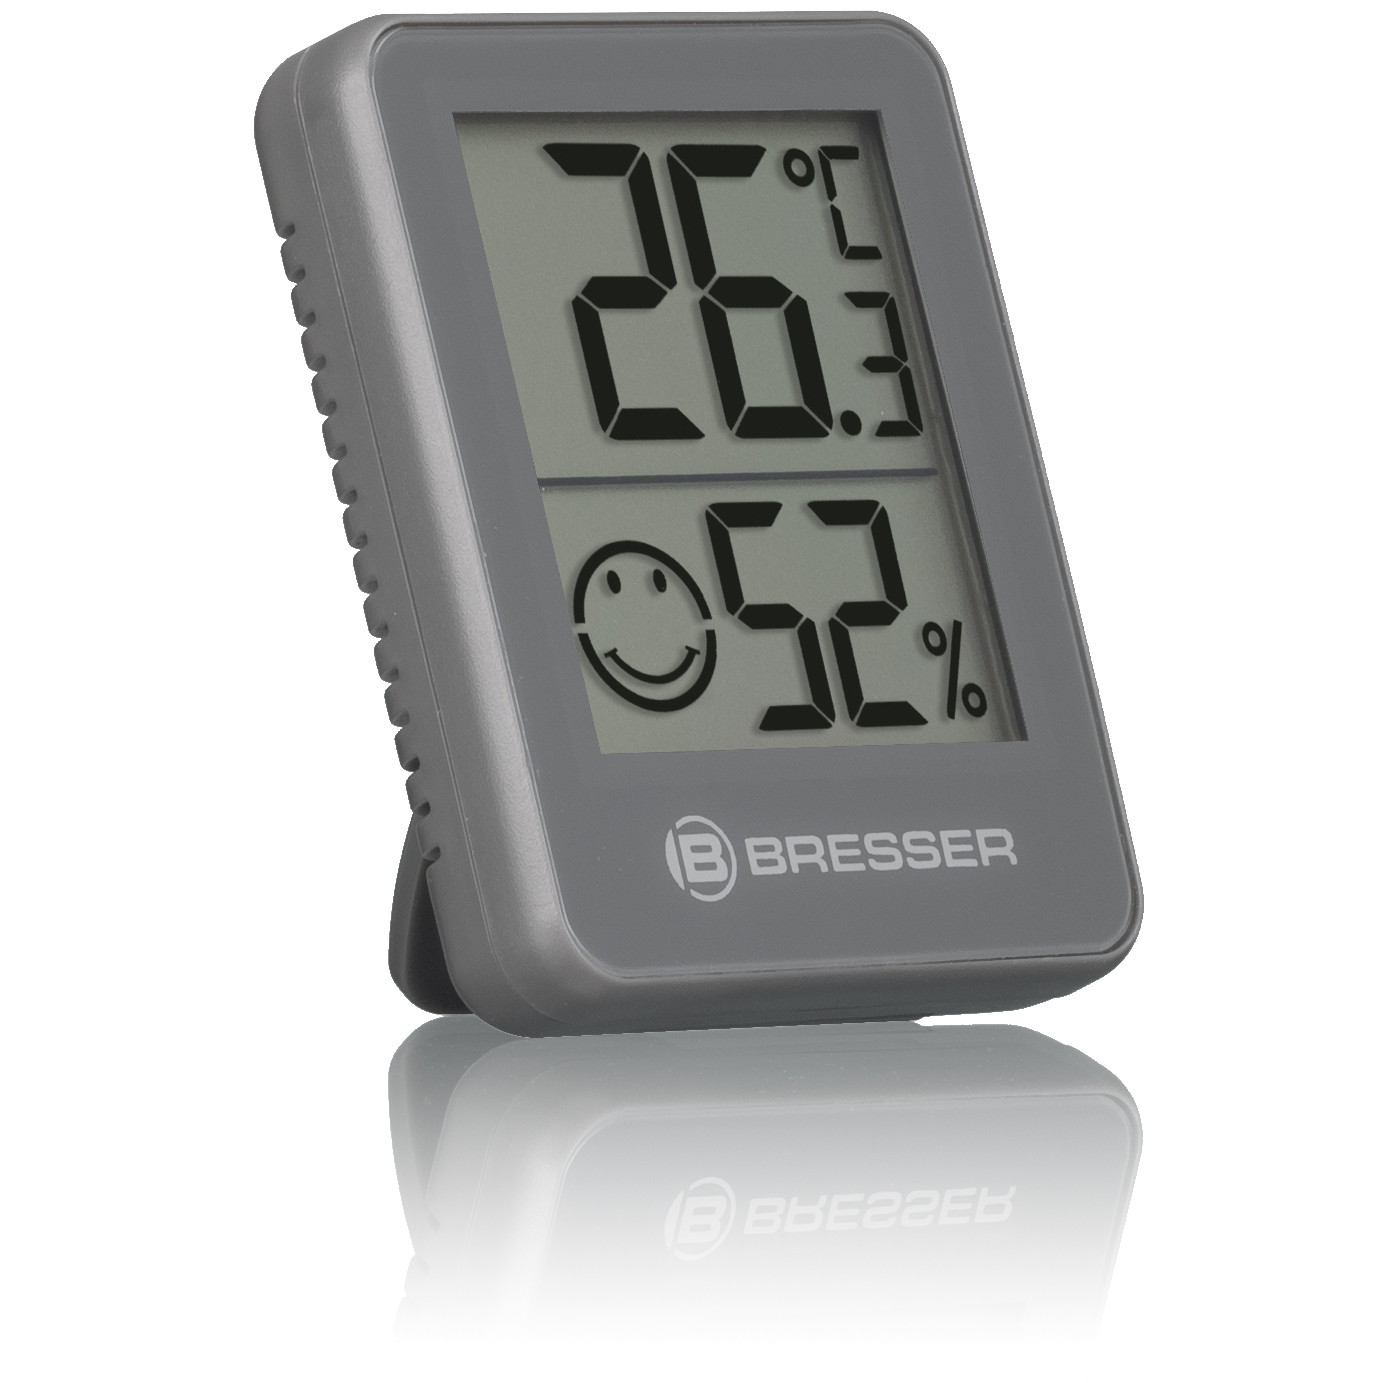 Thermo-/Hygrometer 6er-Set Indikator Temeo Hygro Wetterstation BRESSER